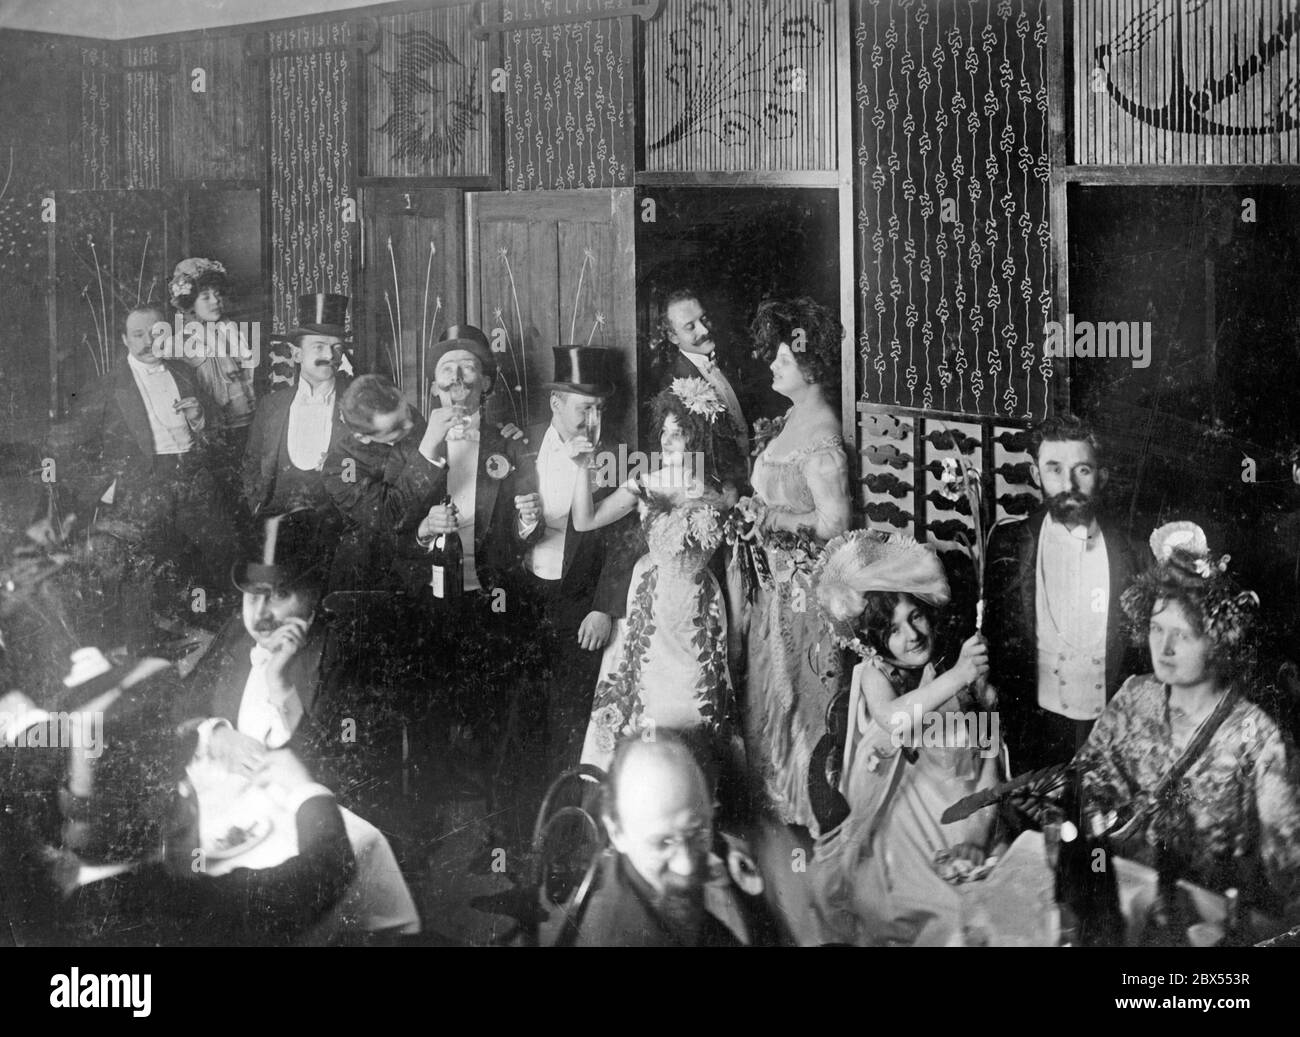 Carnival society in Ernst von Wolzogen's 'Bunte Theater' in Berlin. Stock Photo